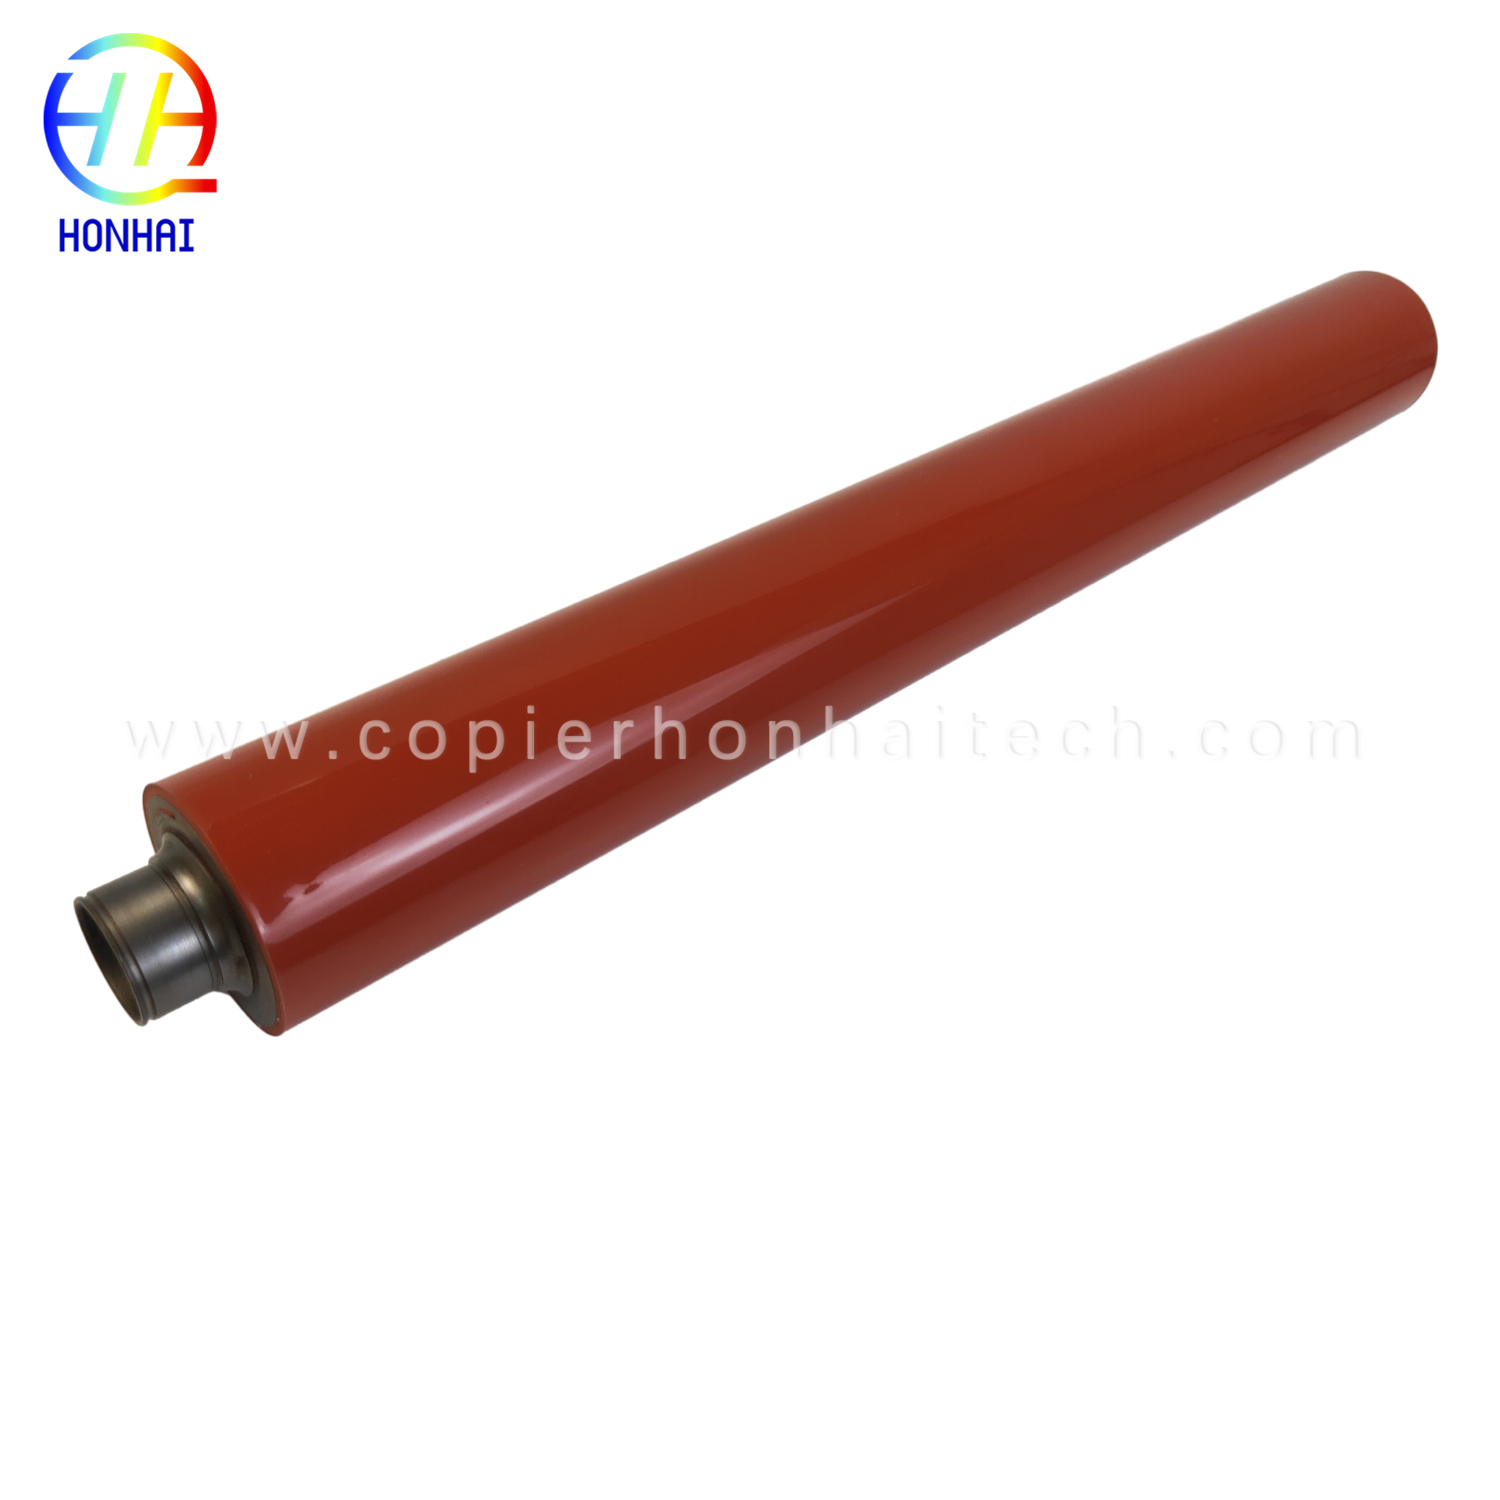 https://www.copierhonhaitech.com/oem-upper-fuser-heat-roller-for-sharp-nrollm1748fczz-mx-2600n-3100n-product/